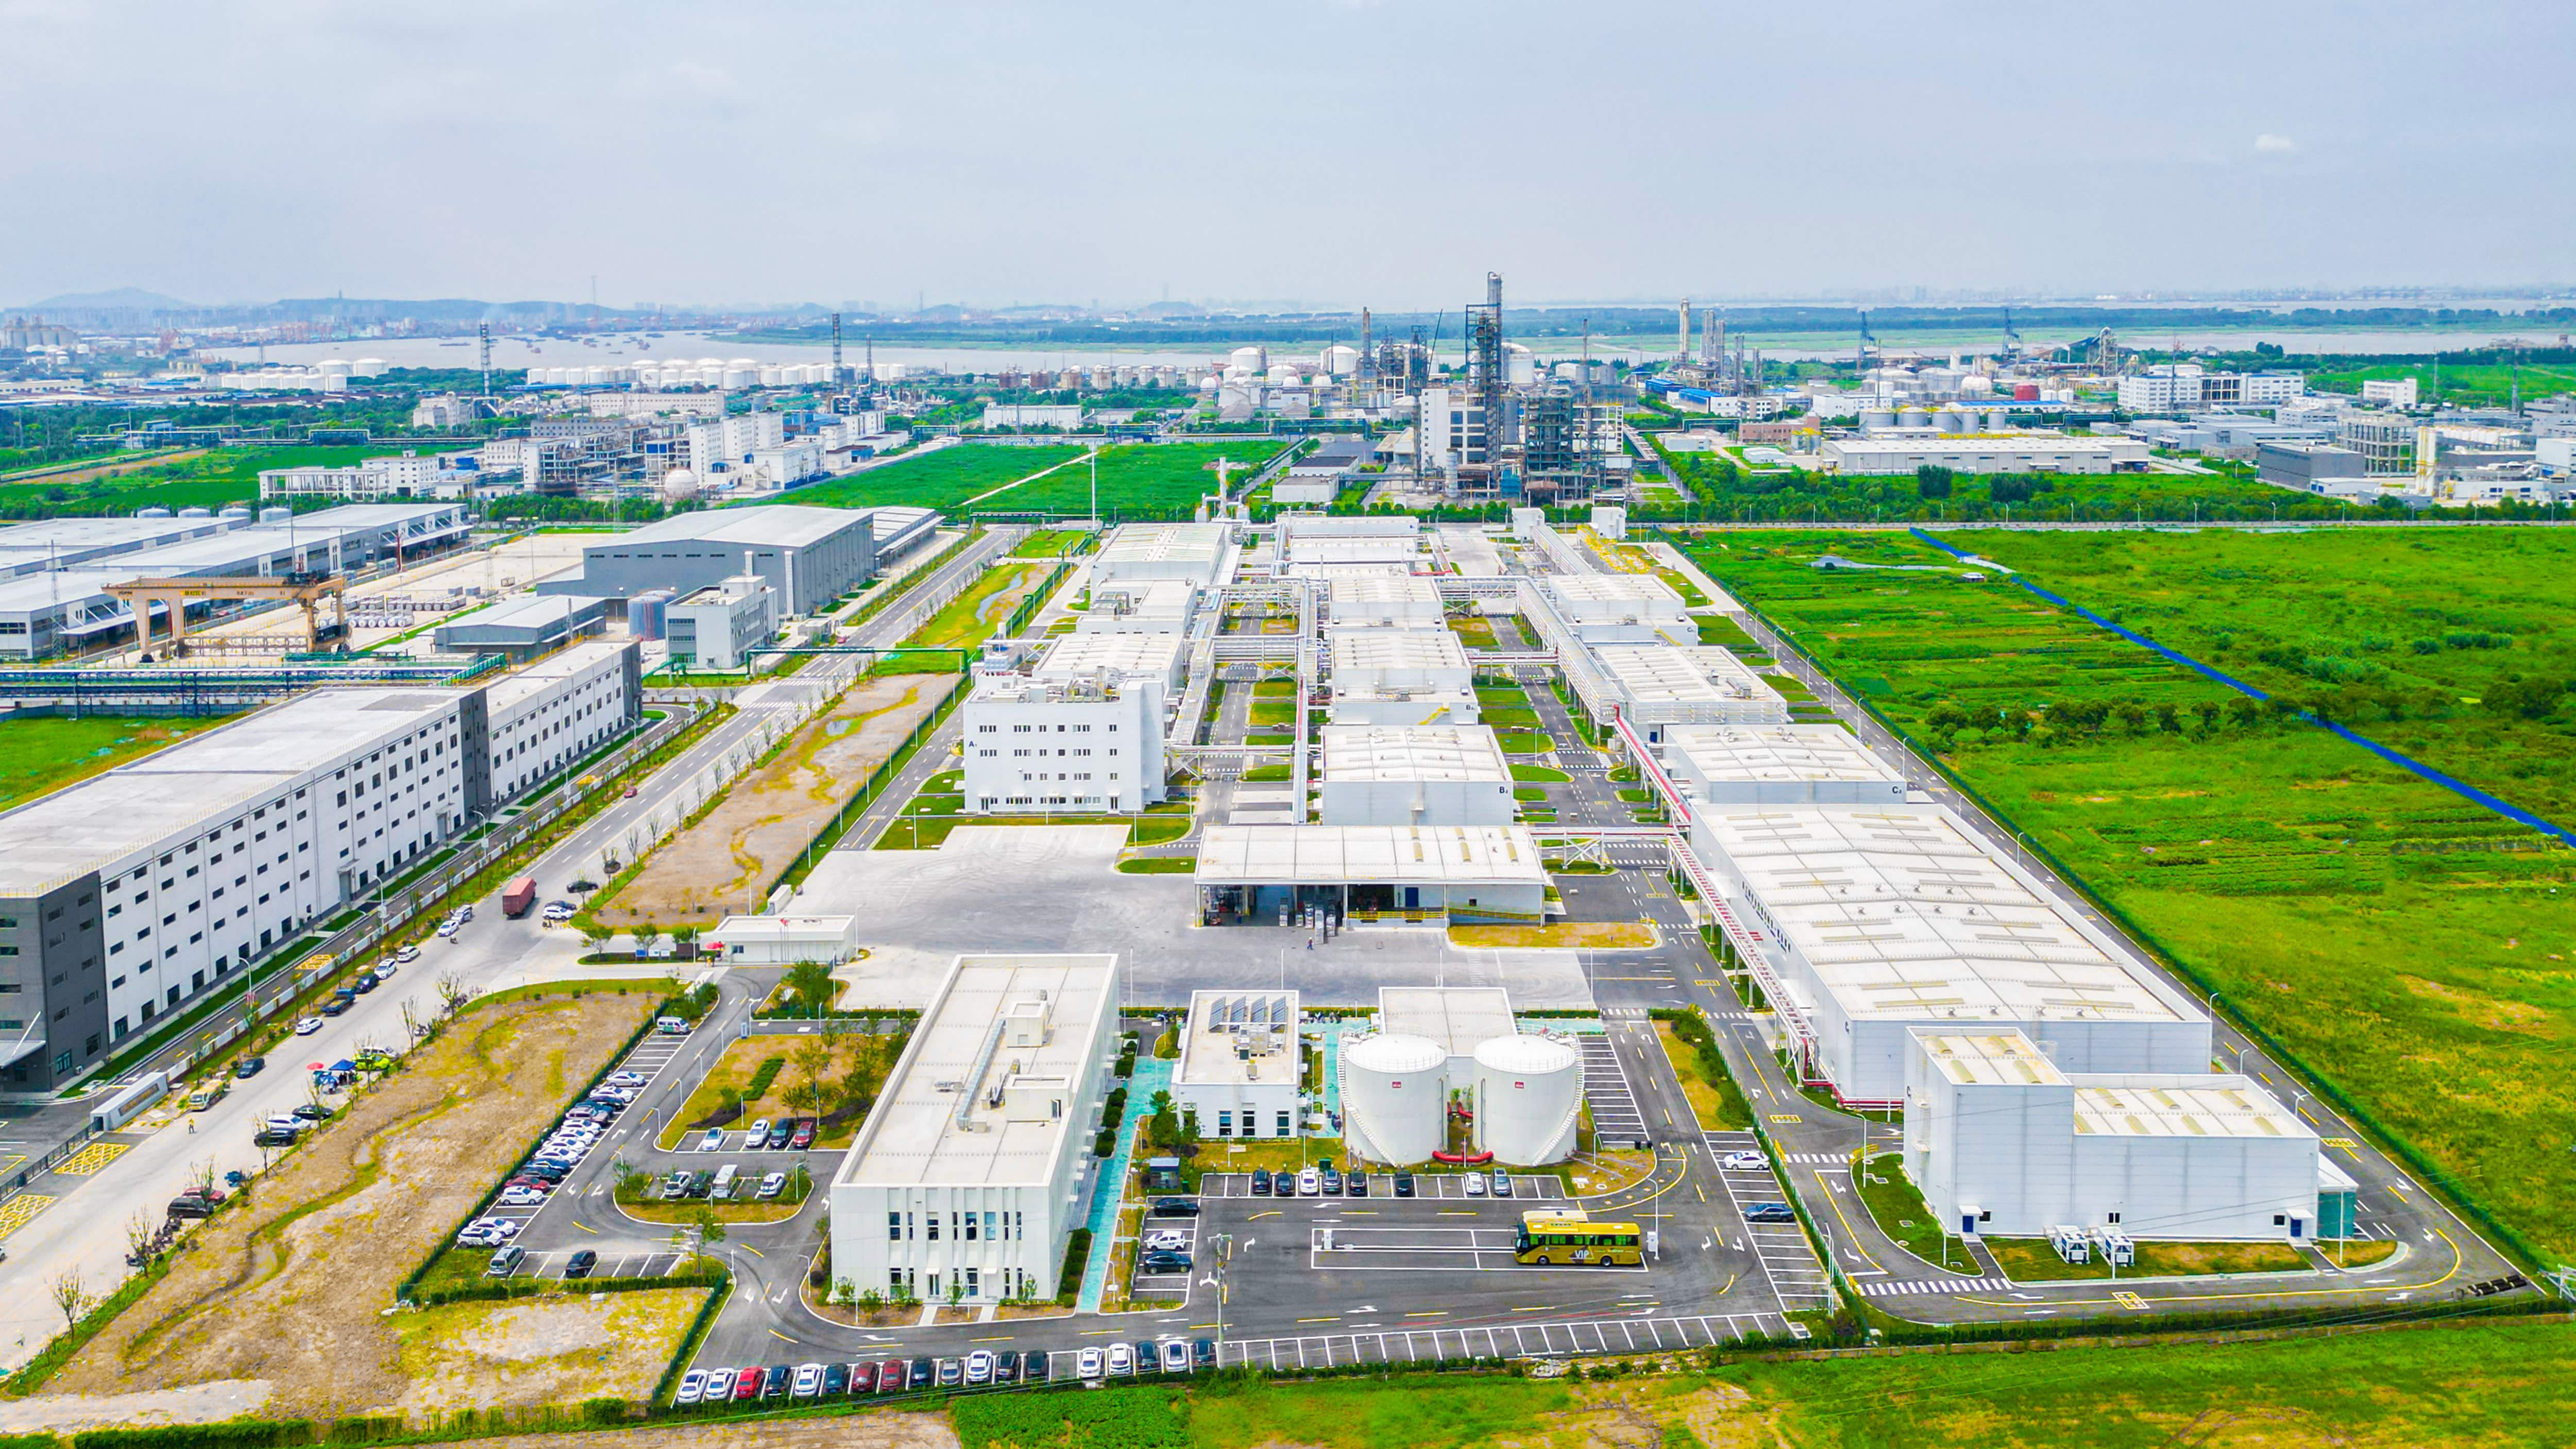 Hempel's new Zhangjiagang factory